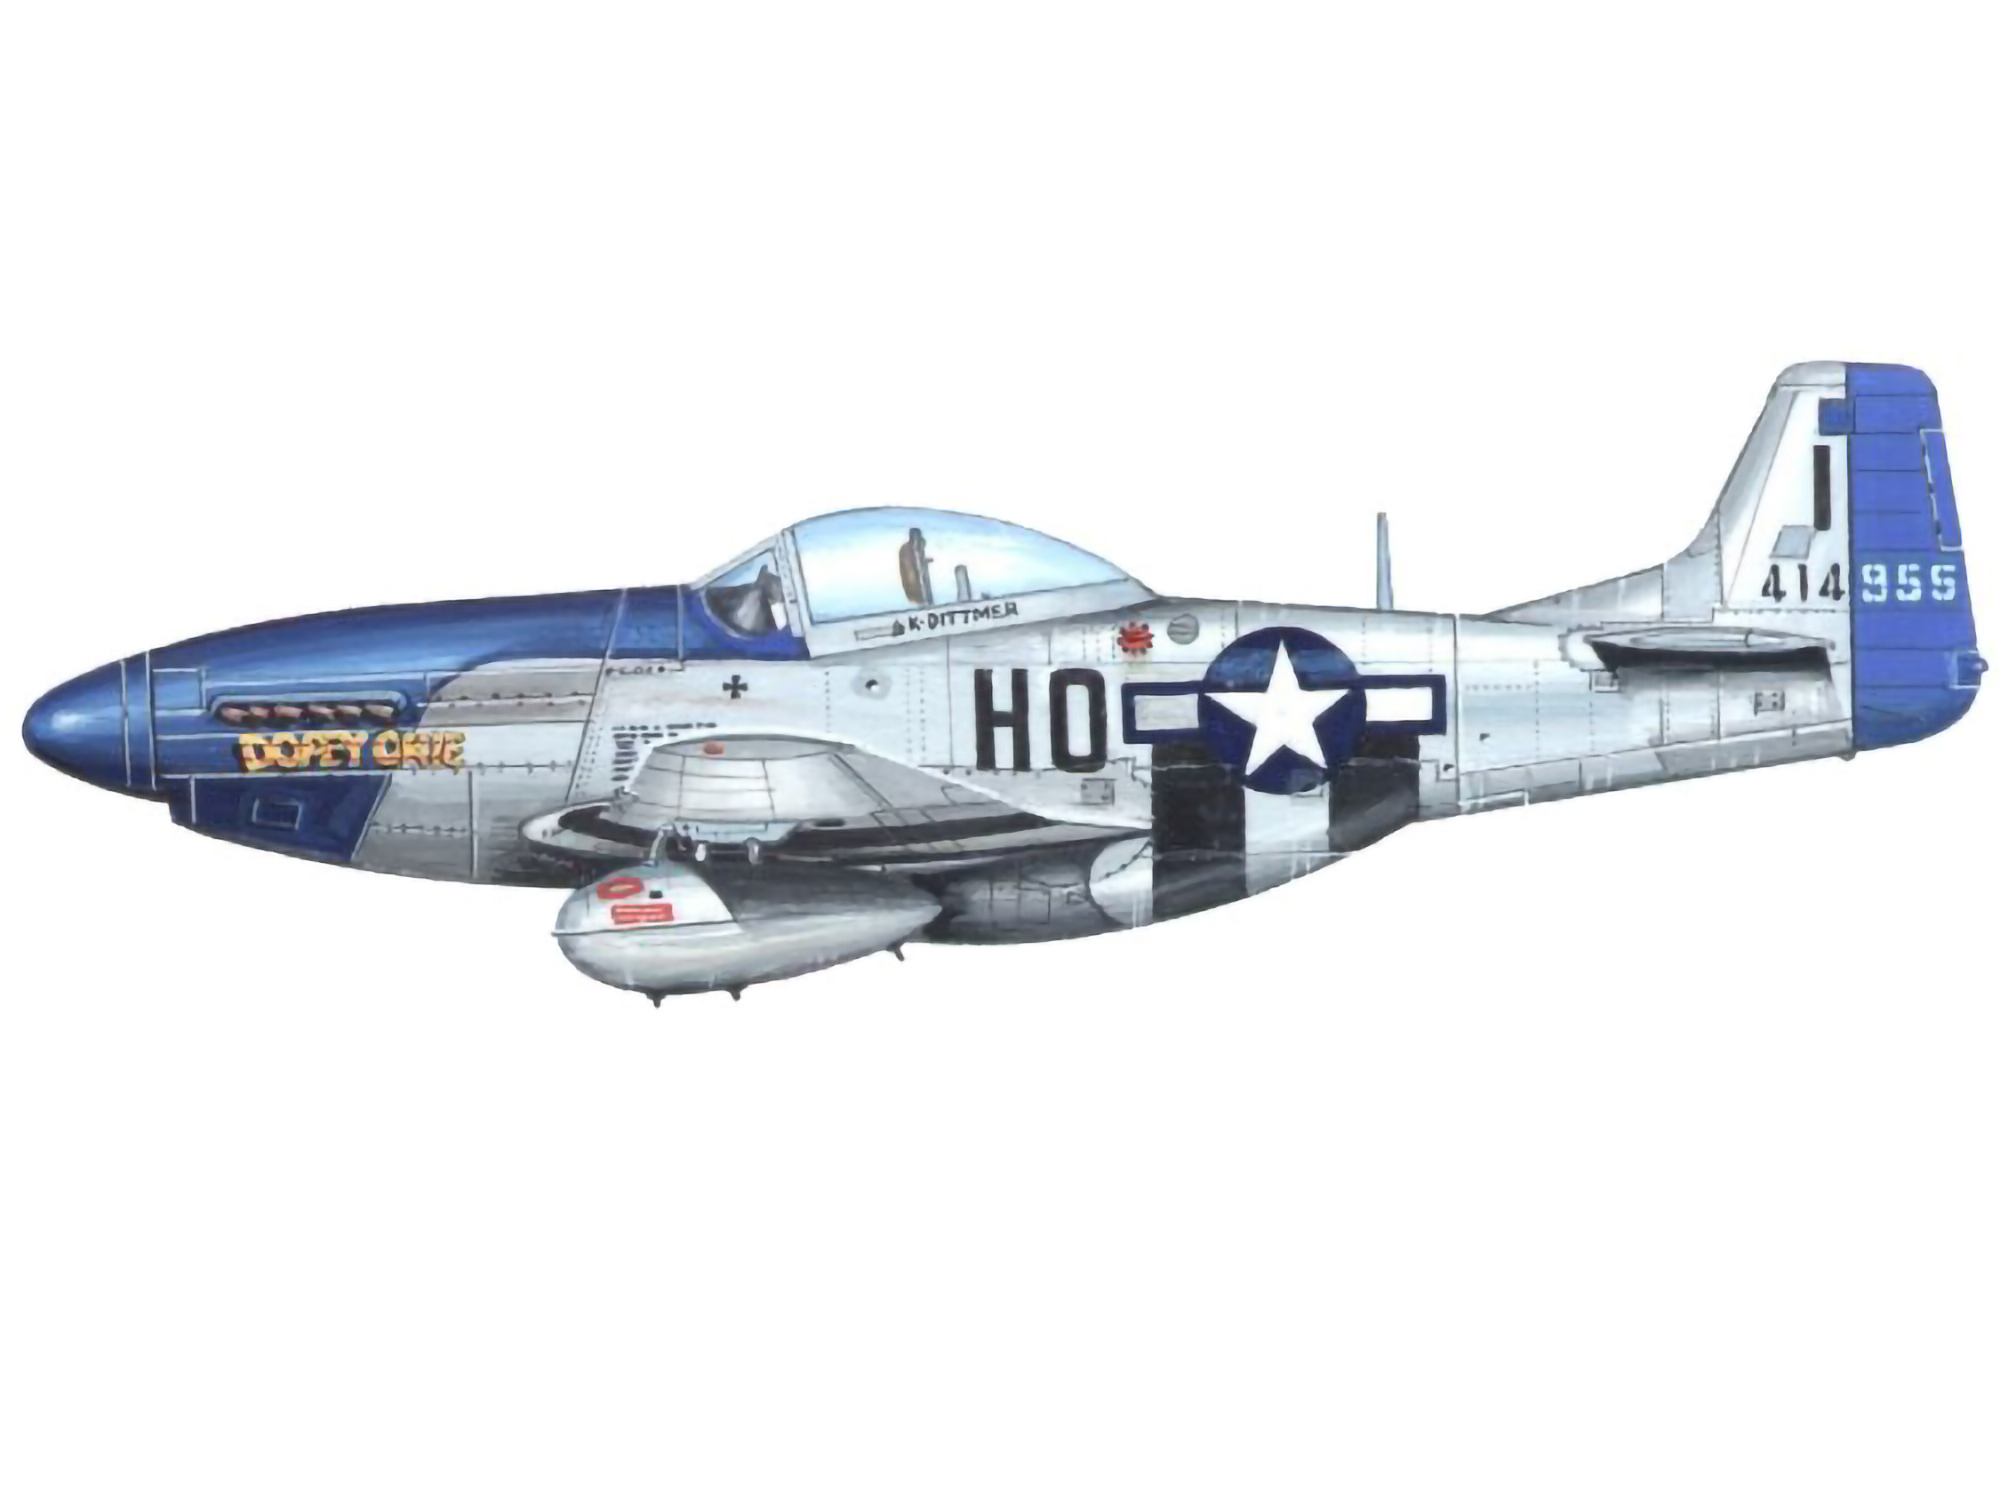 P-51D – Dopey Okie – 44-14955